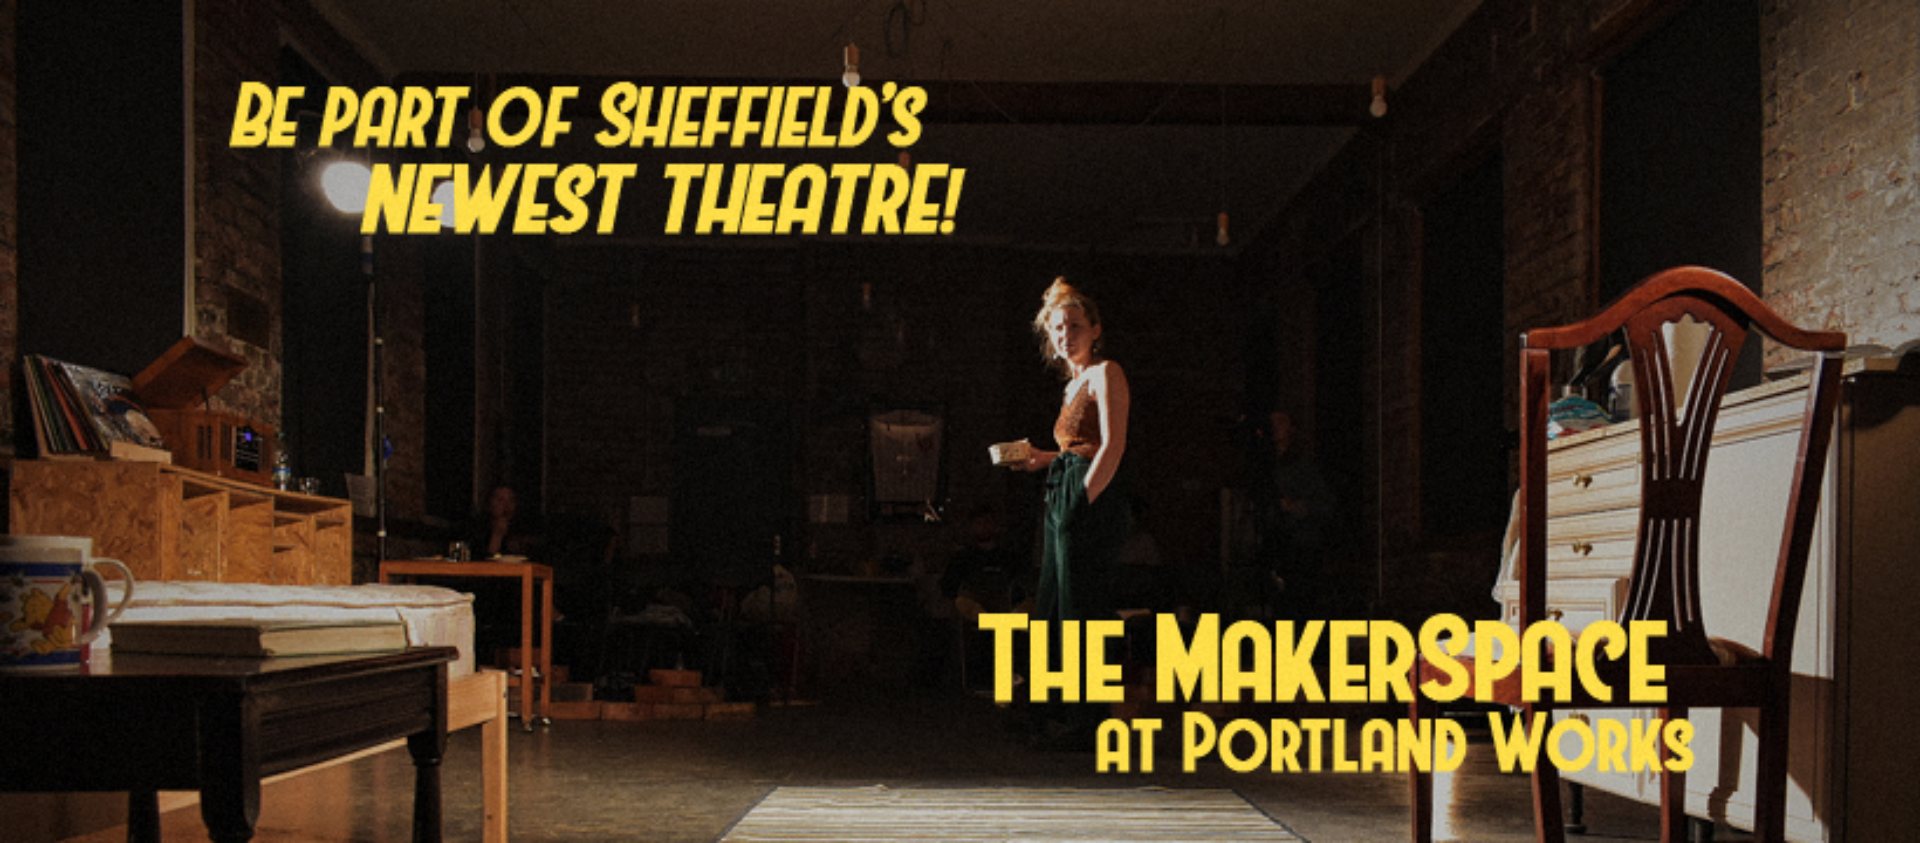 Theatre Makerspace Portland Works Sheffield